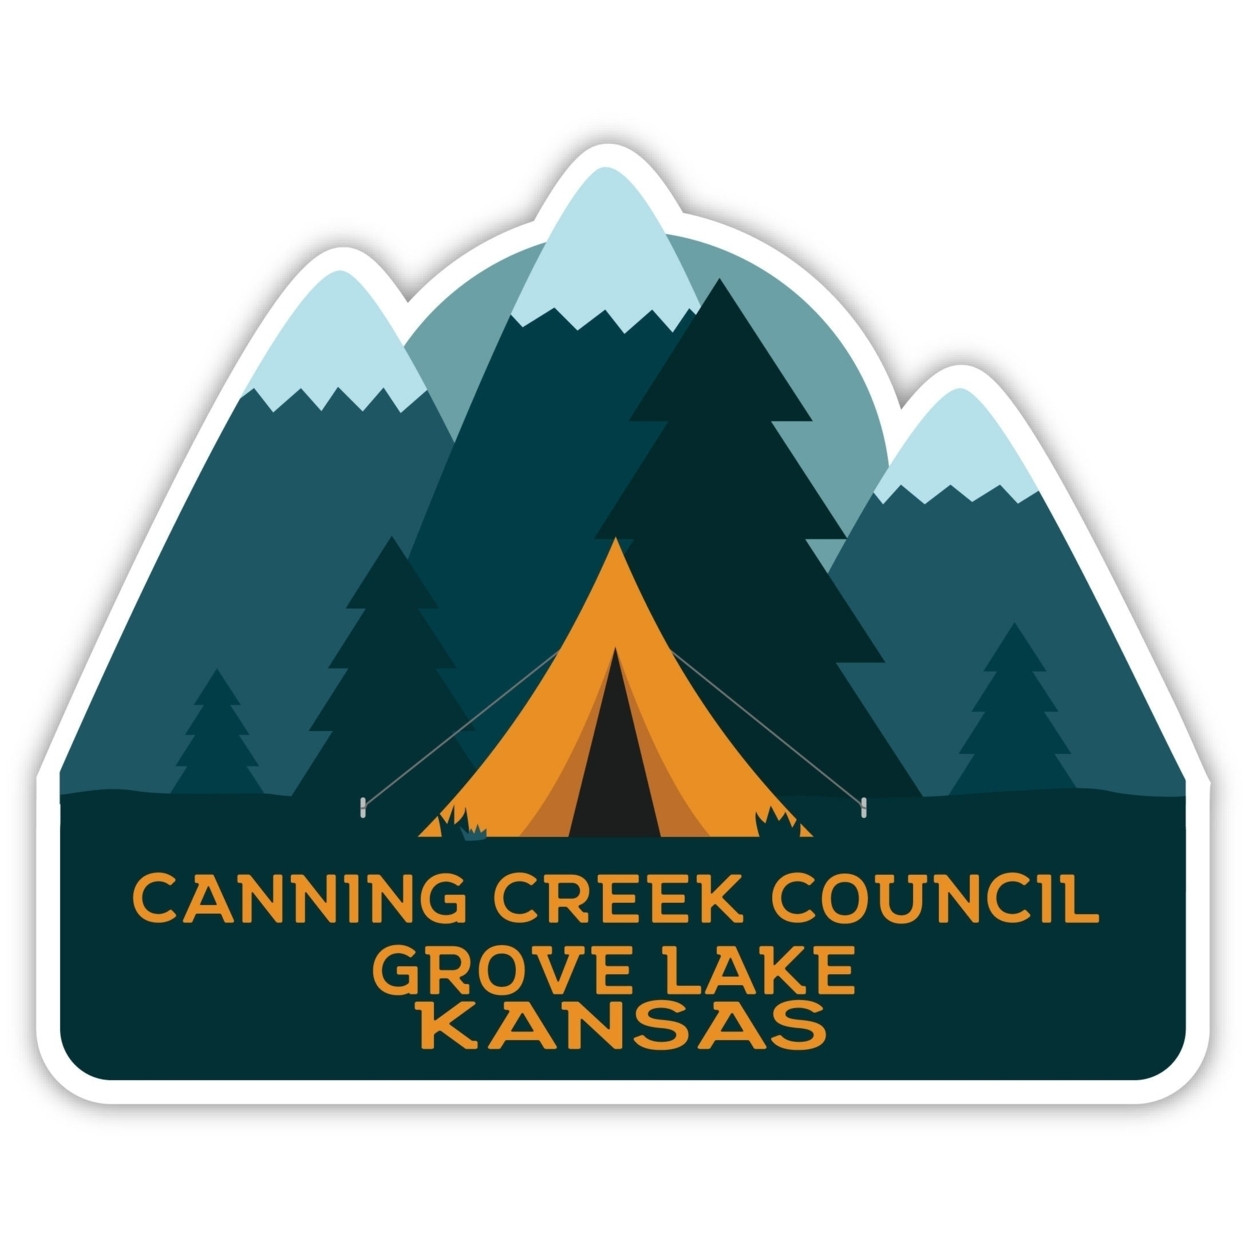 Canning Creek Council Grove Lake Kansas Souvenir Decorative Stickers (Choose Theme And Size) - Single Unit, 8-Inch, Tent